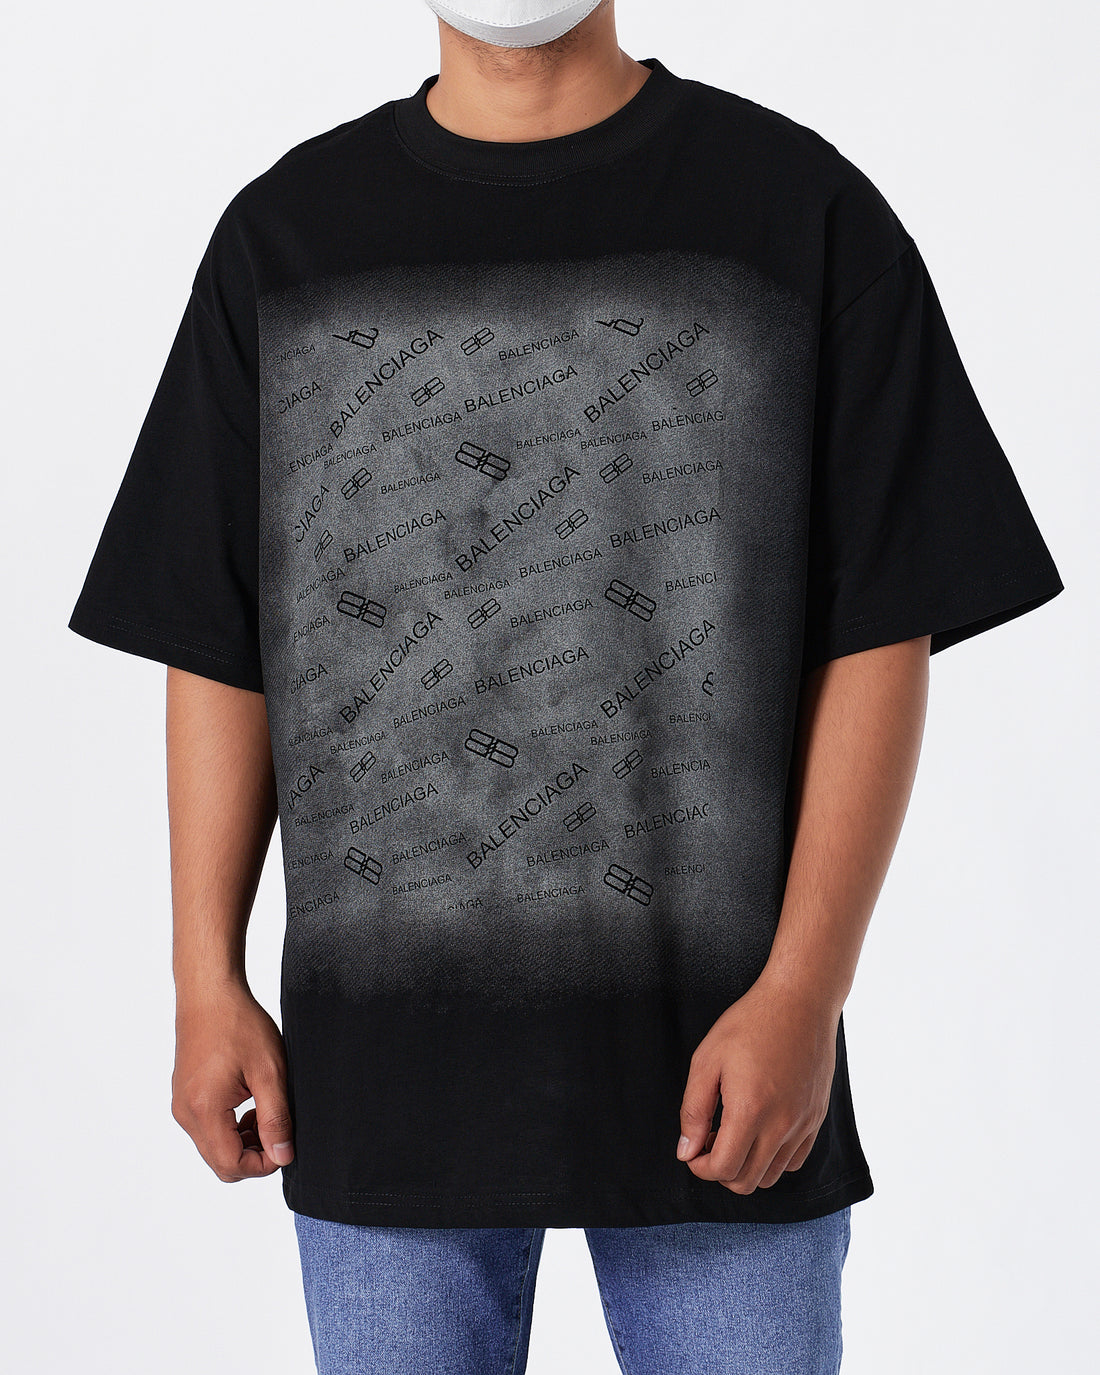 BAL Sliver Logo Printed Men Black T-Shirt 25.90